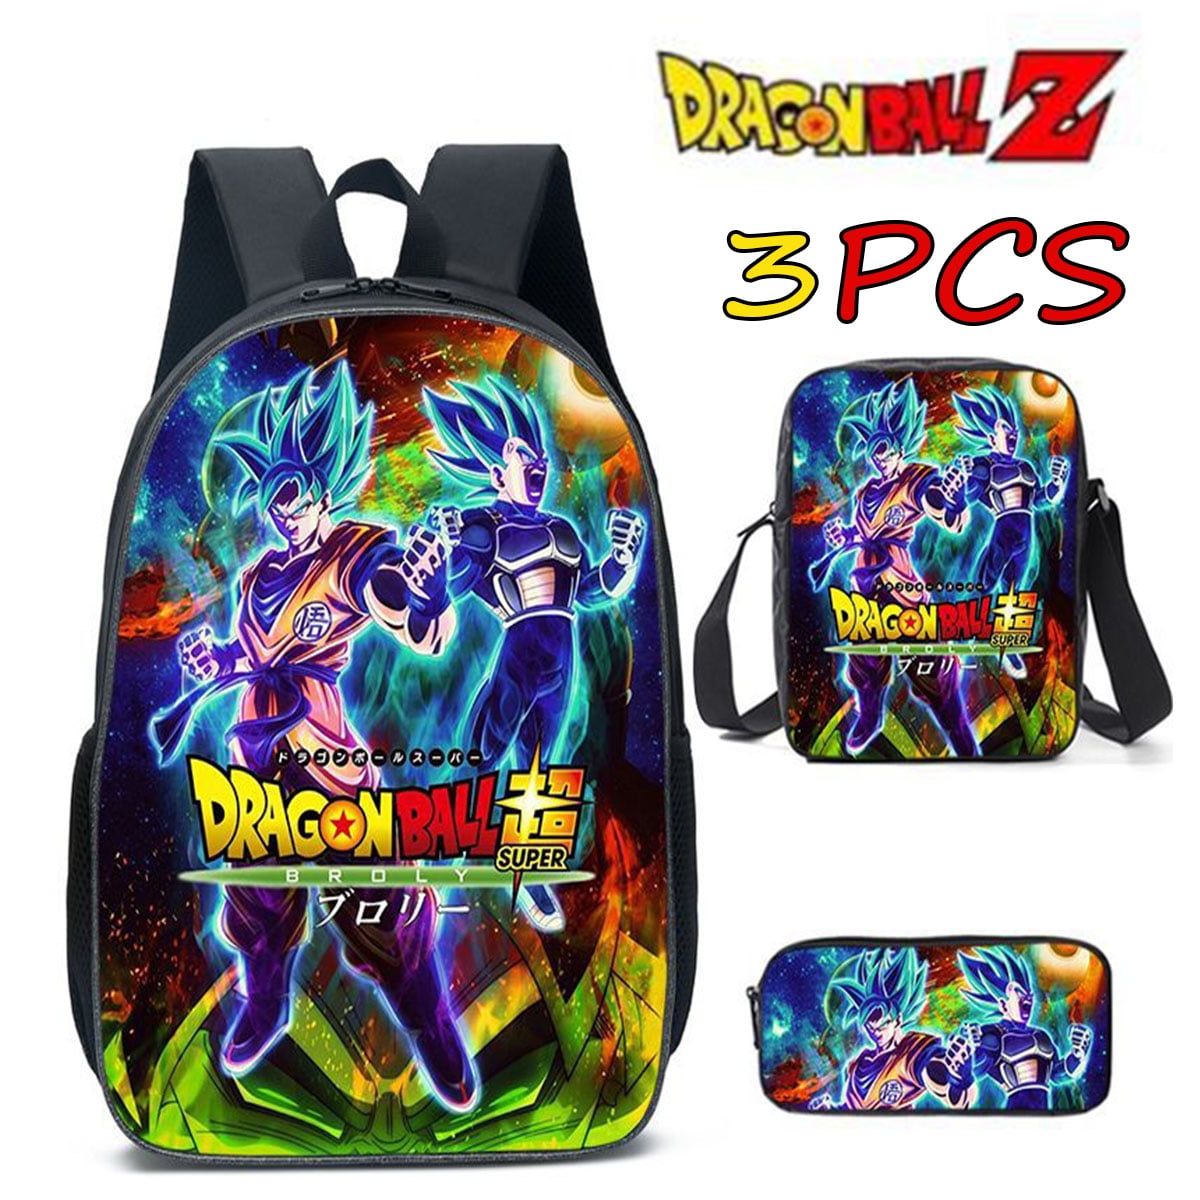 3pcs/Set Dragon Ball Z Backpack Anime Cartoon Super Saiyan Goku